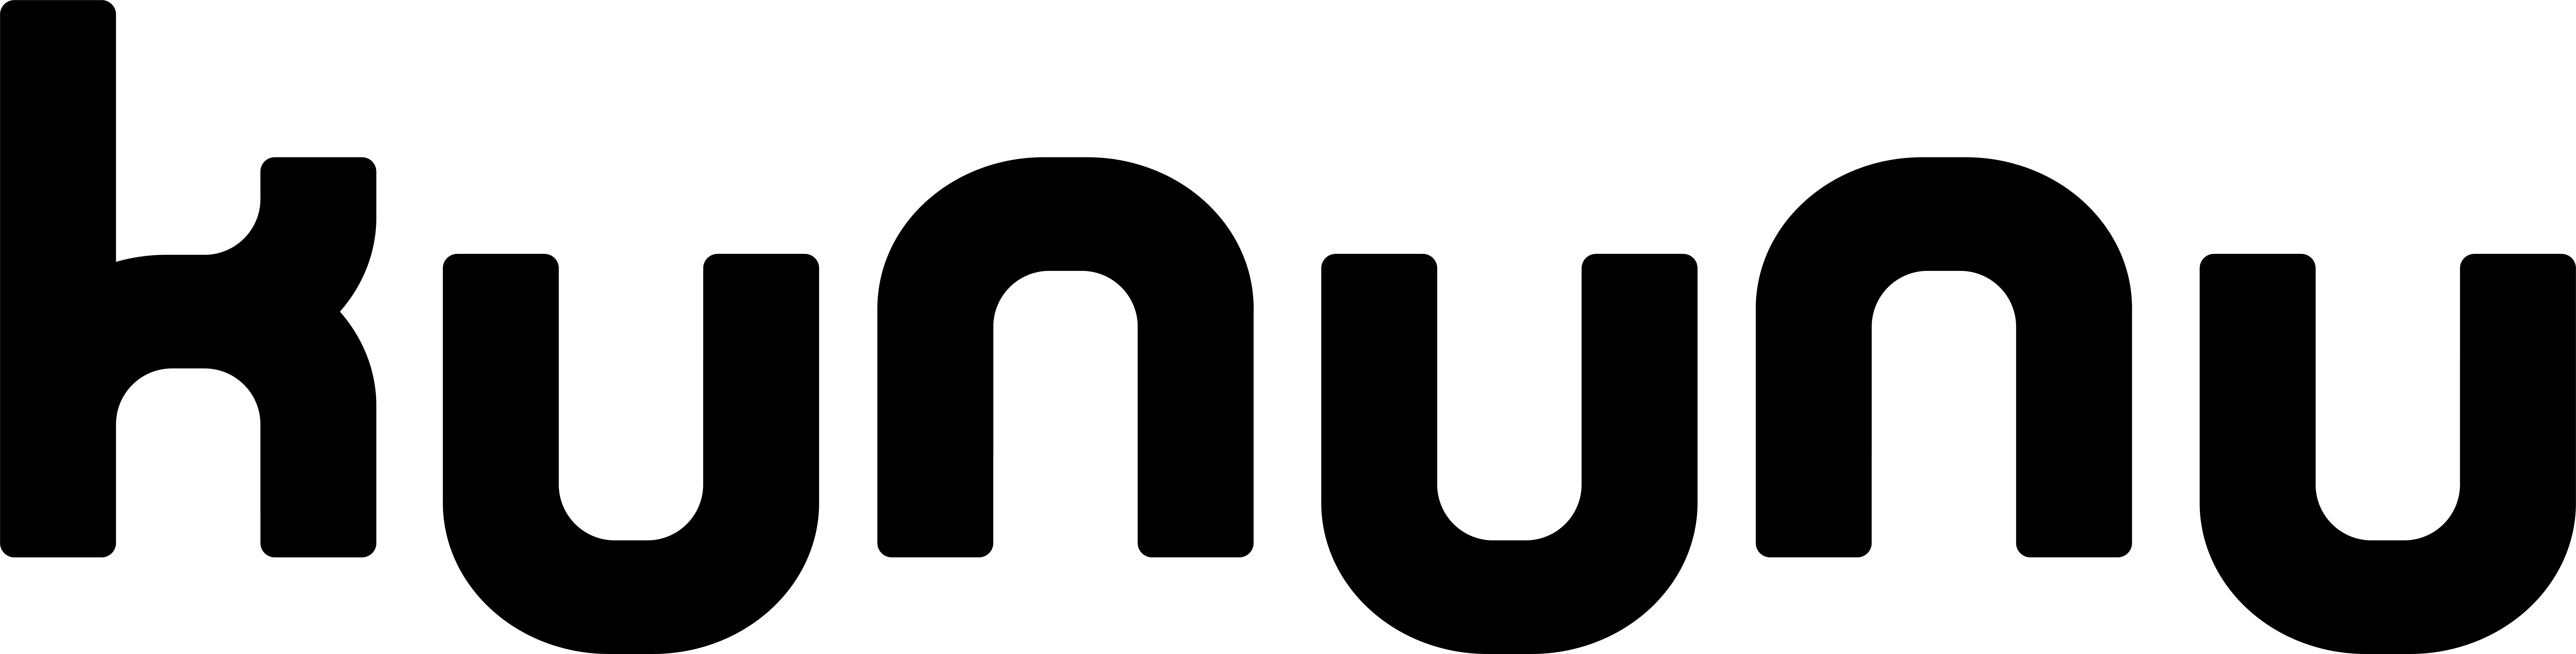 Das kununu Logo in schwarz.